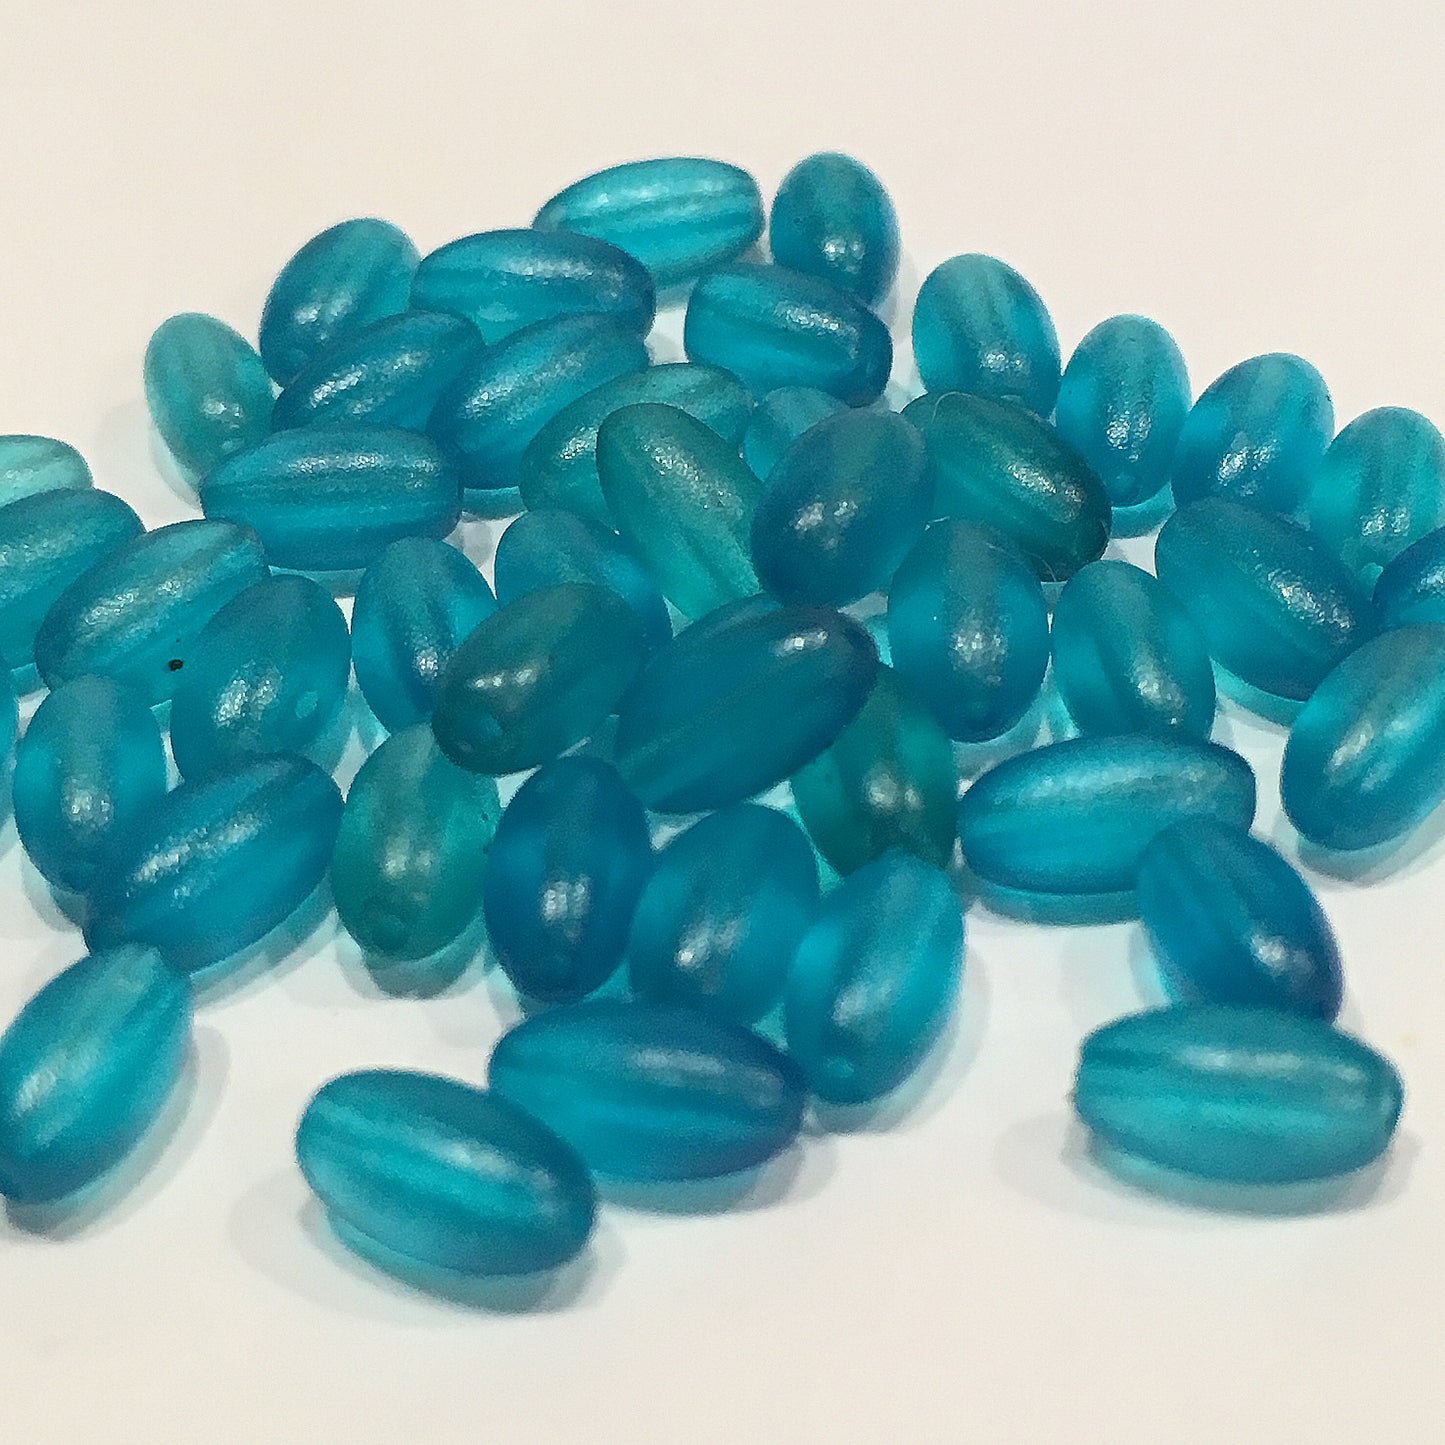 Translucent Blue Acrylic Oval Beads, 7 x 4 mm, 46 Beads